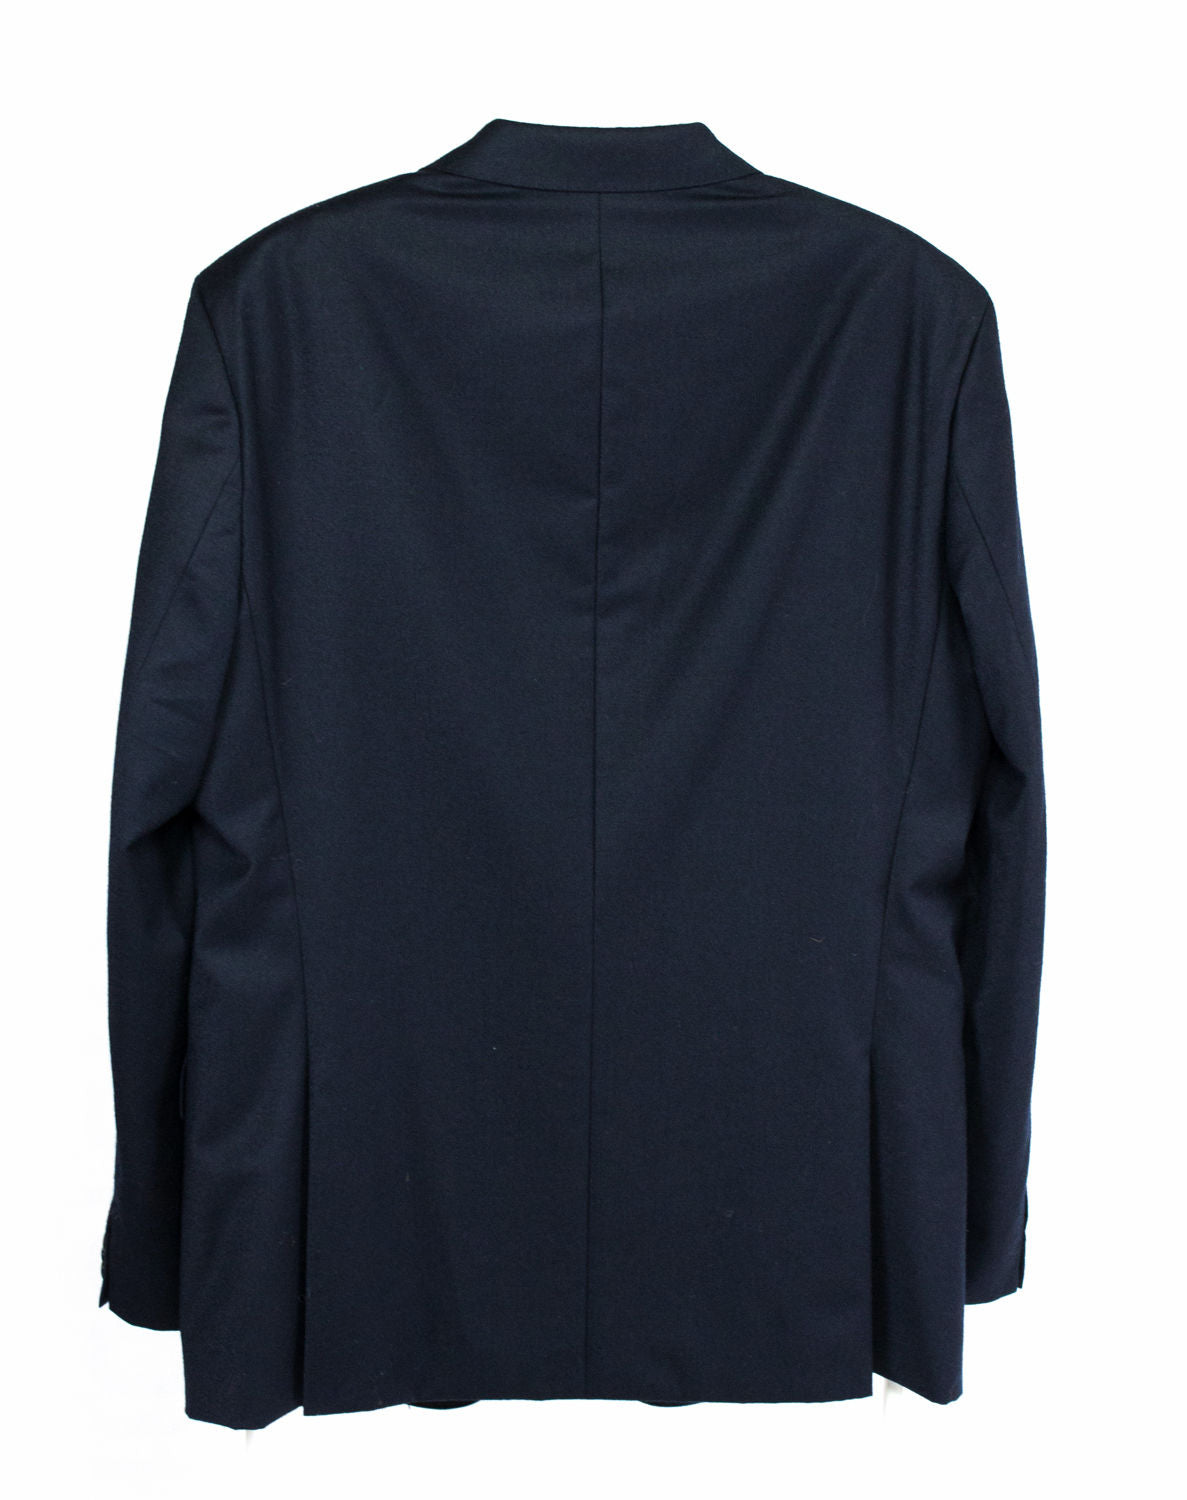 HUGO BOSS Super 100% Wool Navy Blazer Jacket SIZE US 44R, EUR 54 - secondfirst